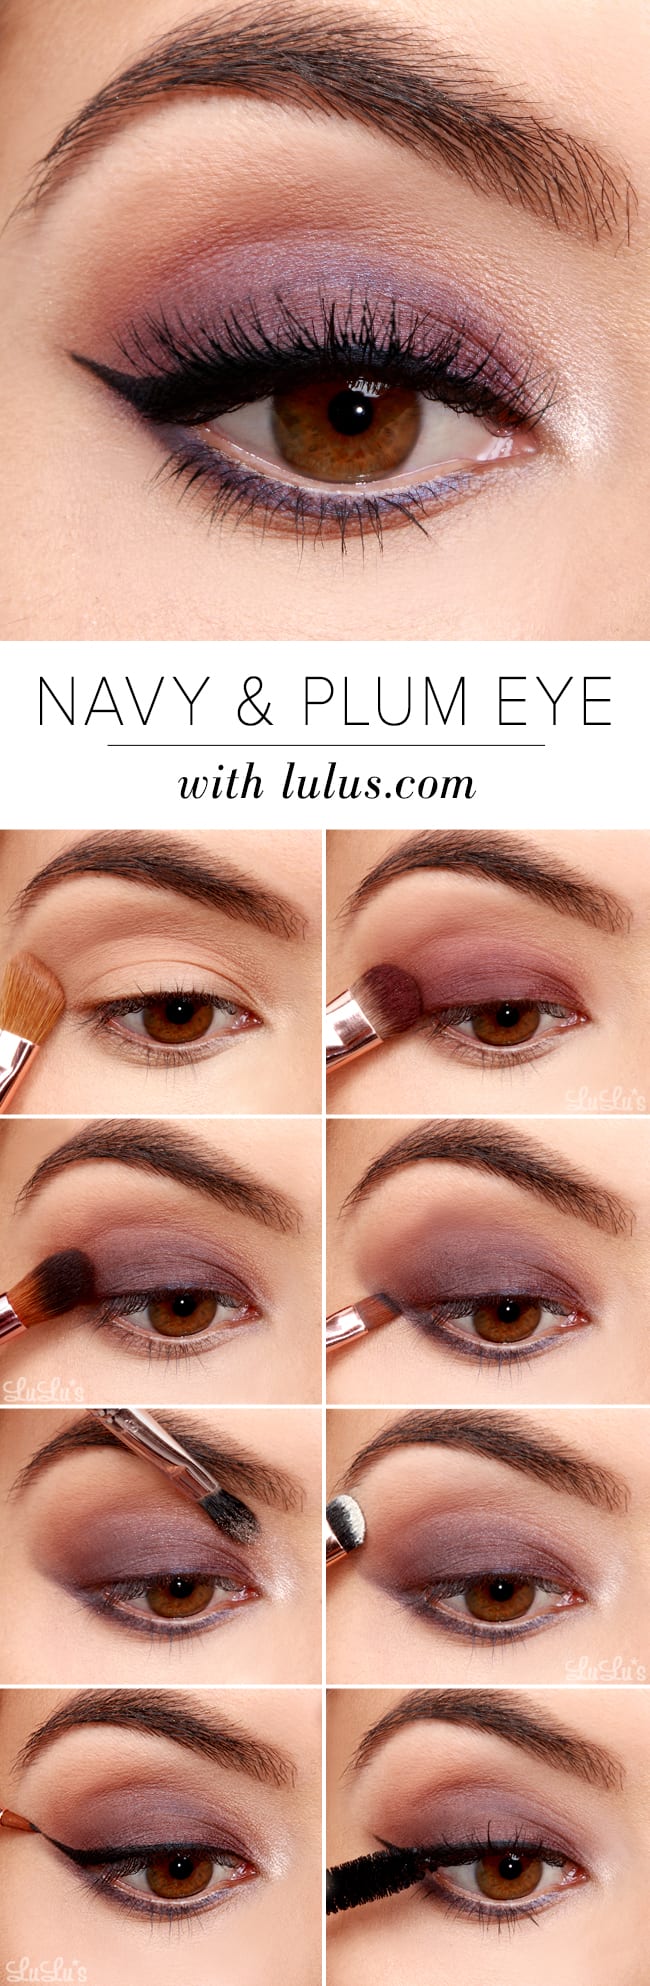 Lulus How-To: Navy and Plum Smokey Eyeshadow Tutorial - Lulus.com Fashion  Blog